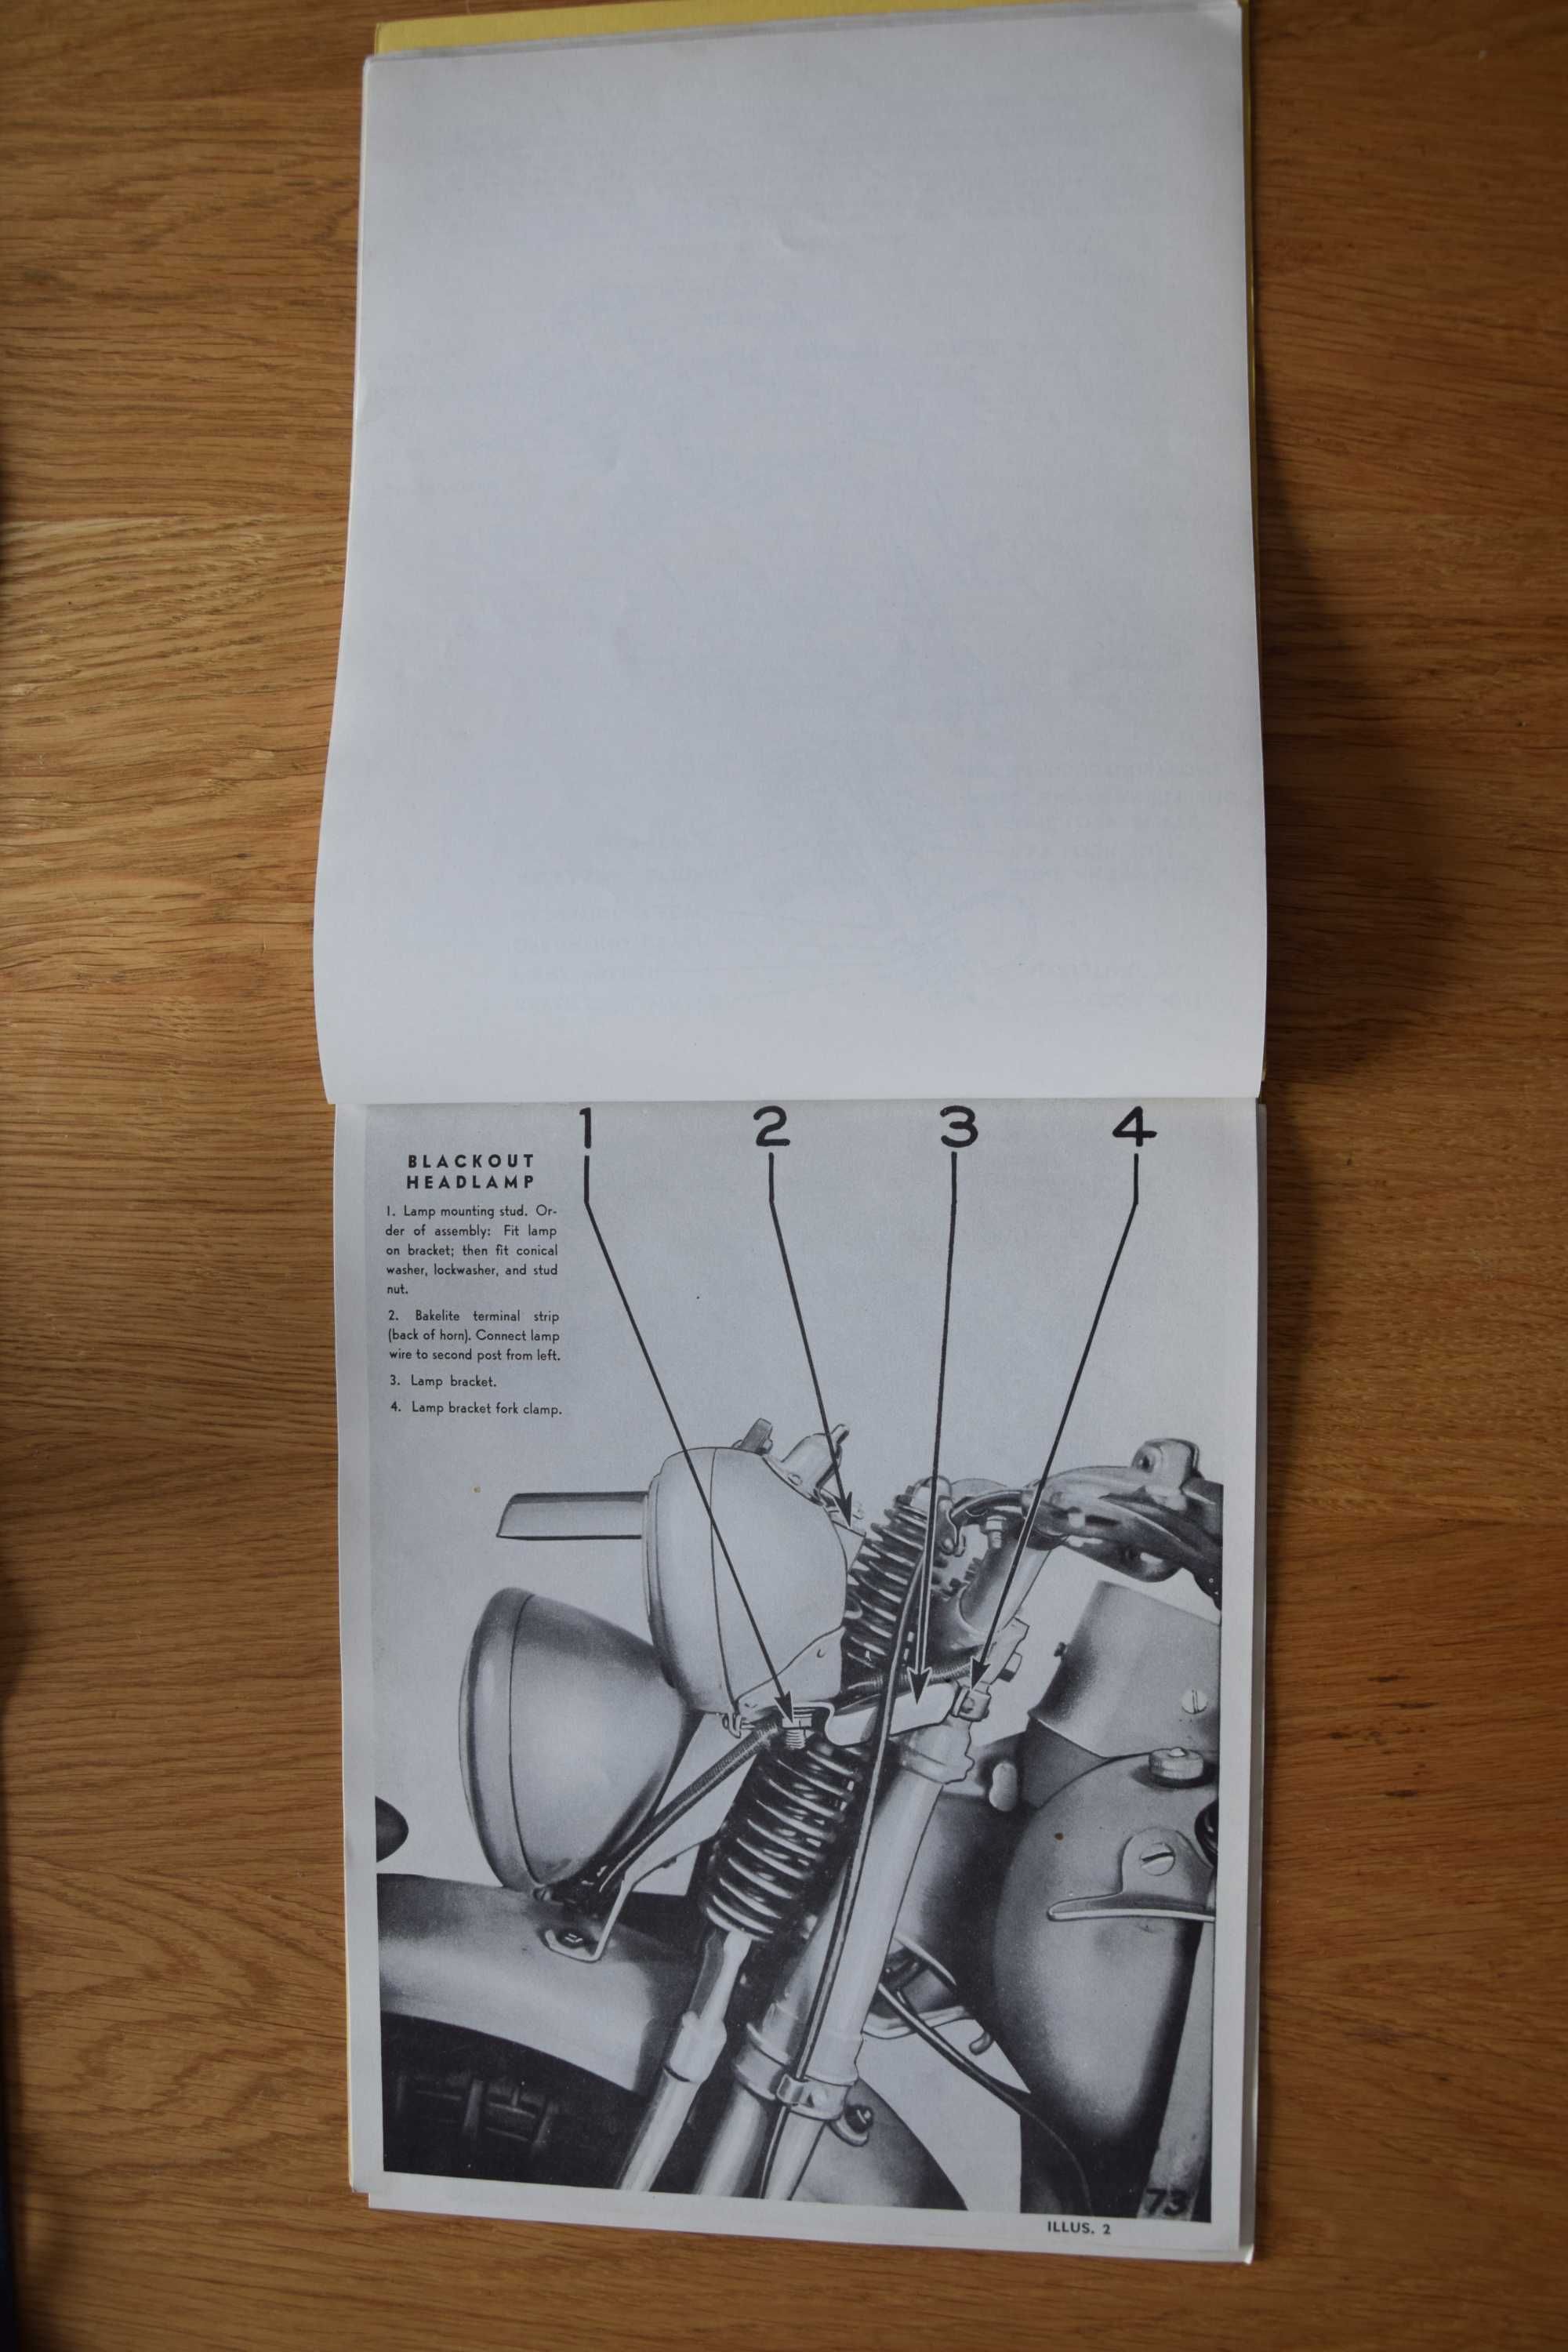 Instrukcja katalog Harley Davidson WLA Military 45